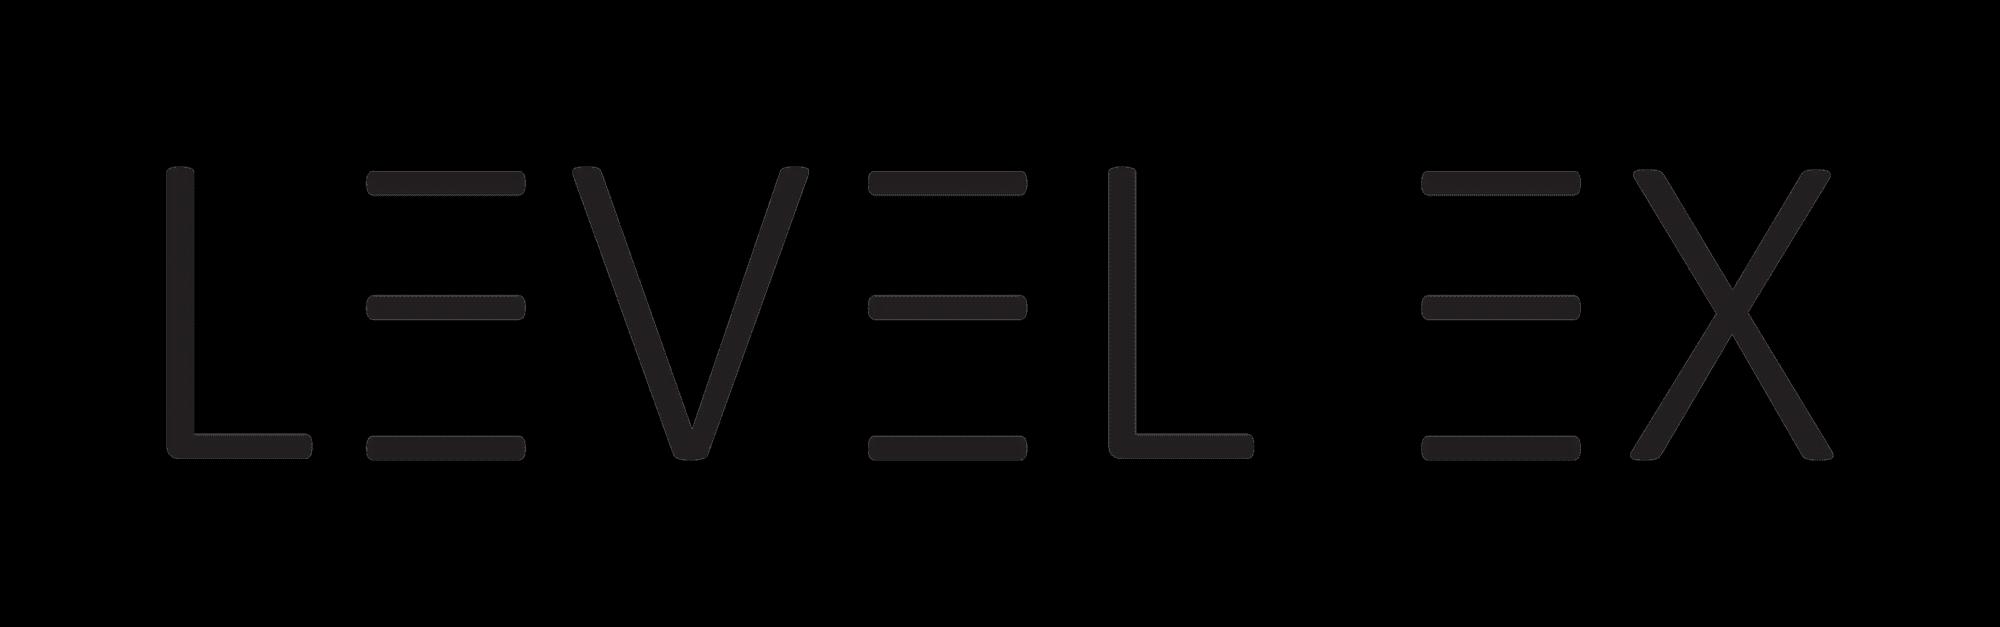 Level Ex_logo